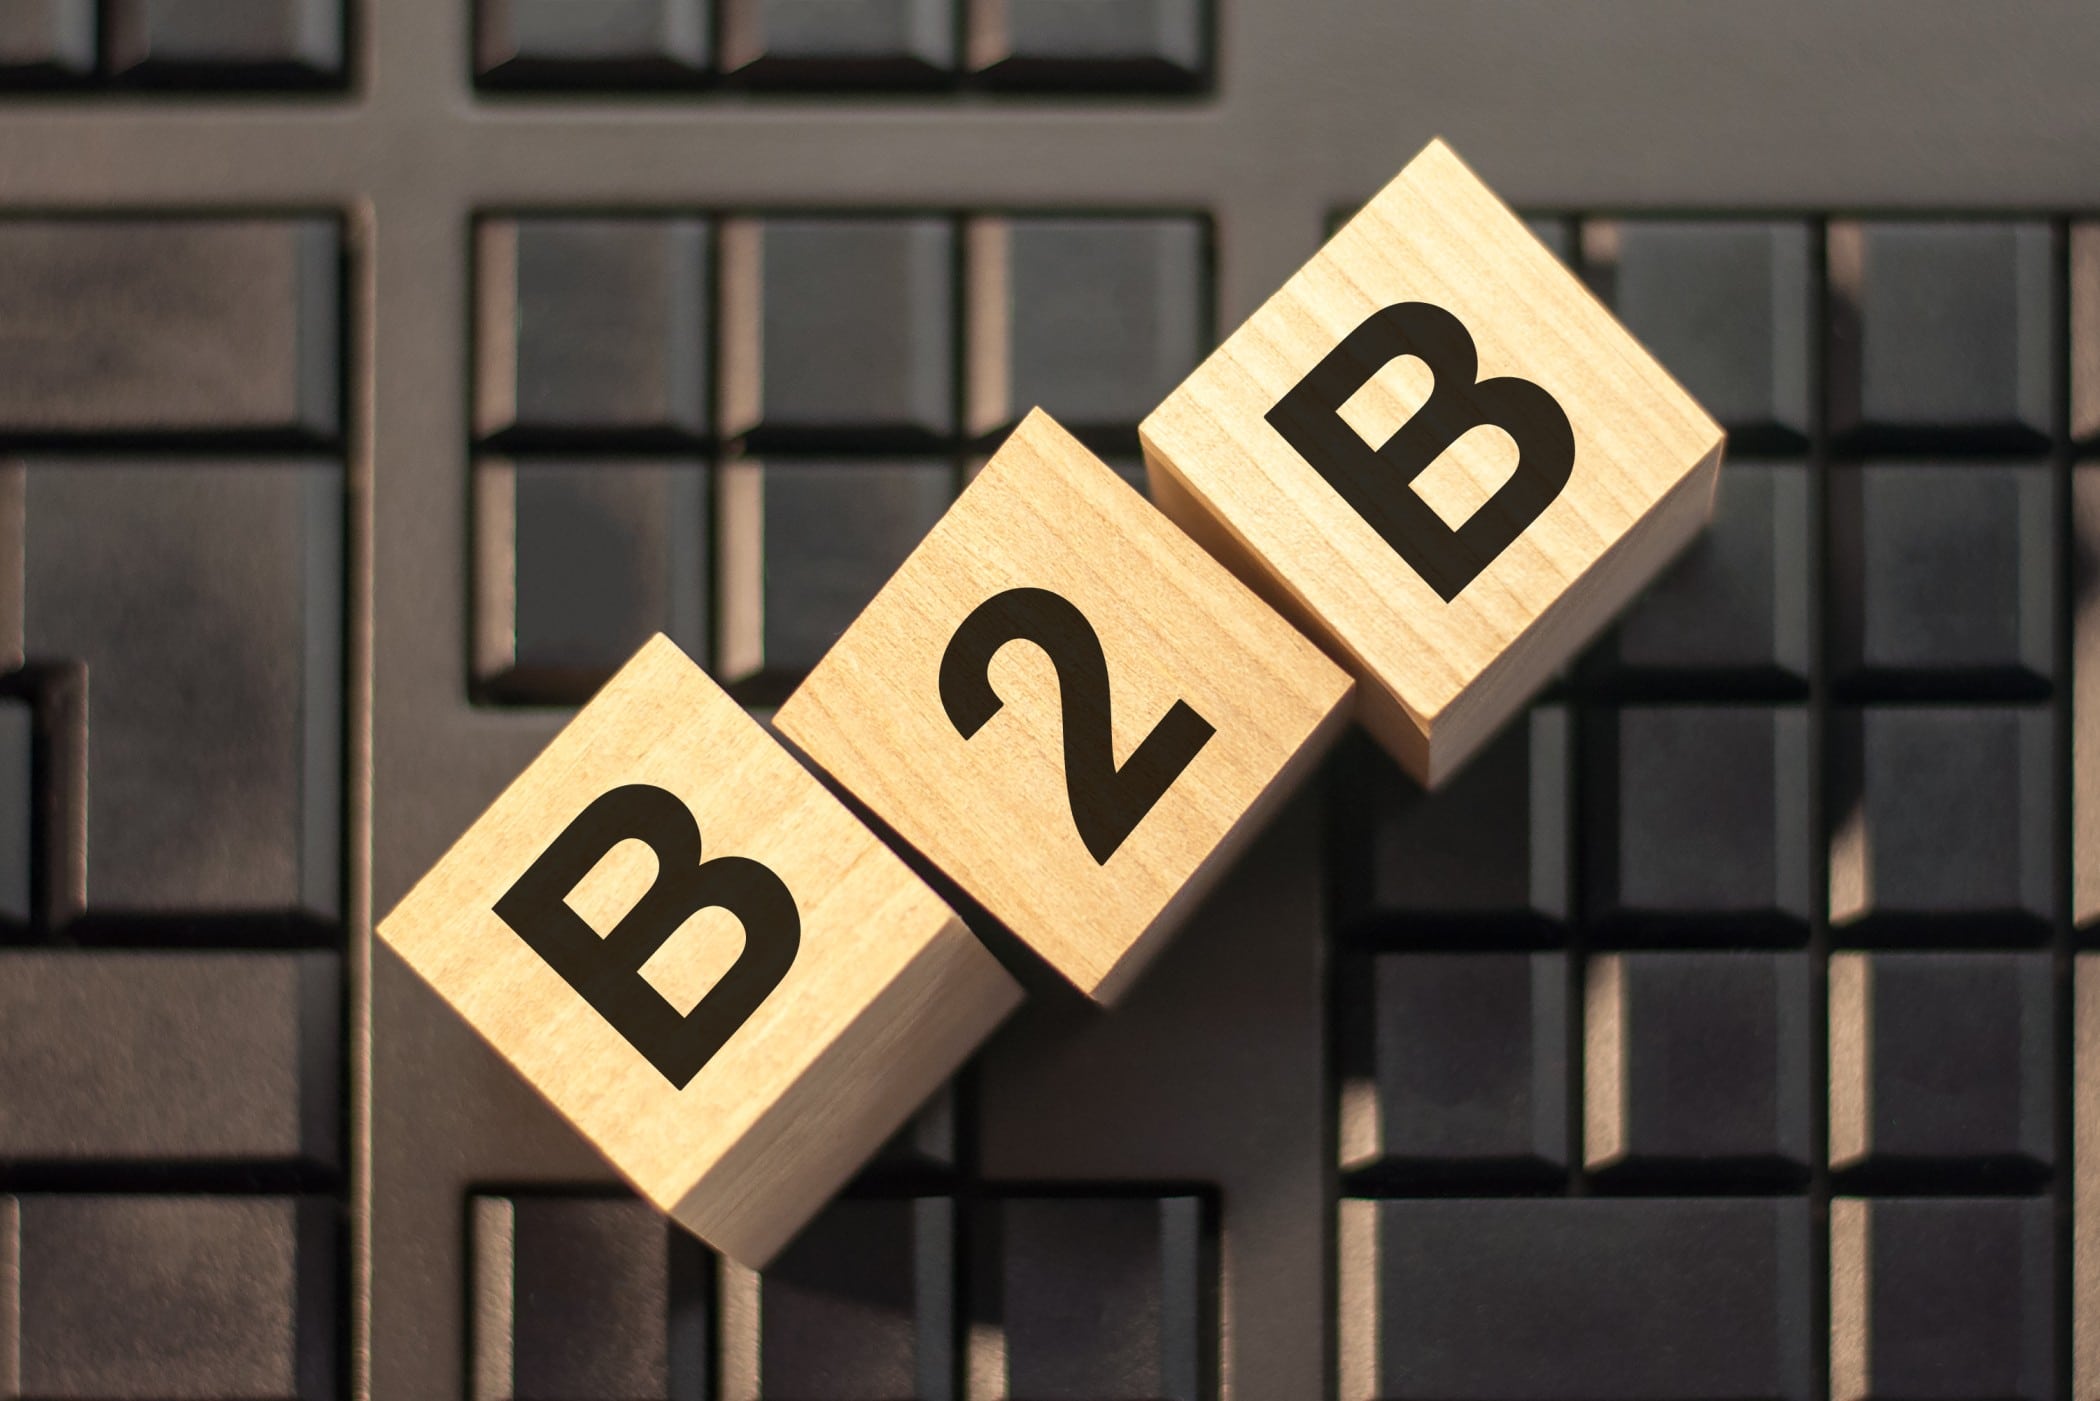 b2b word in wood shape